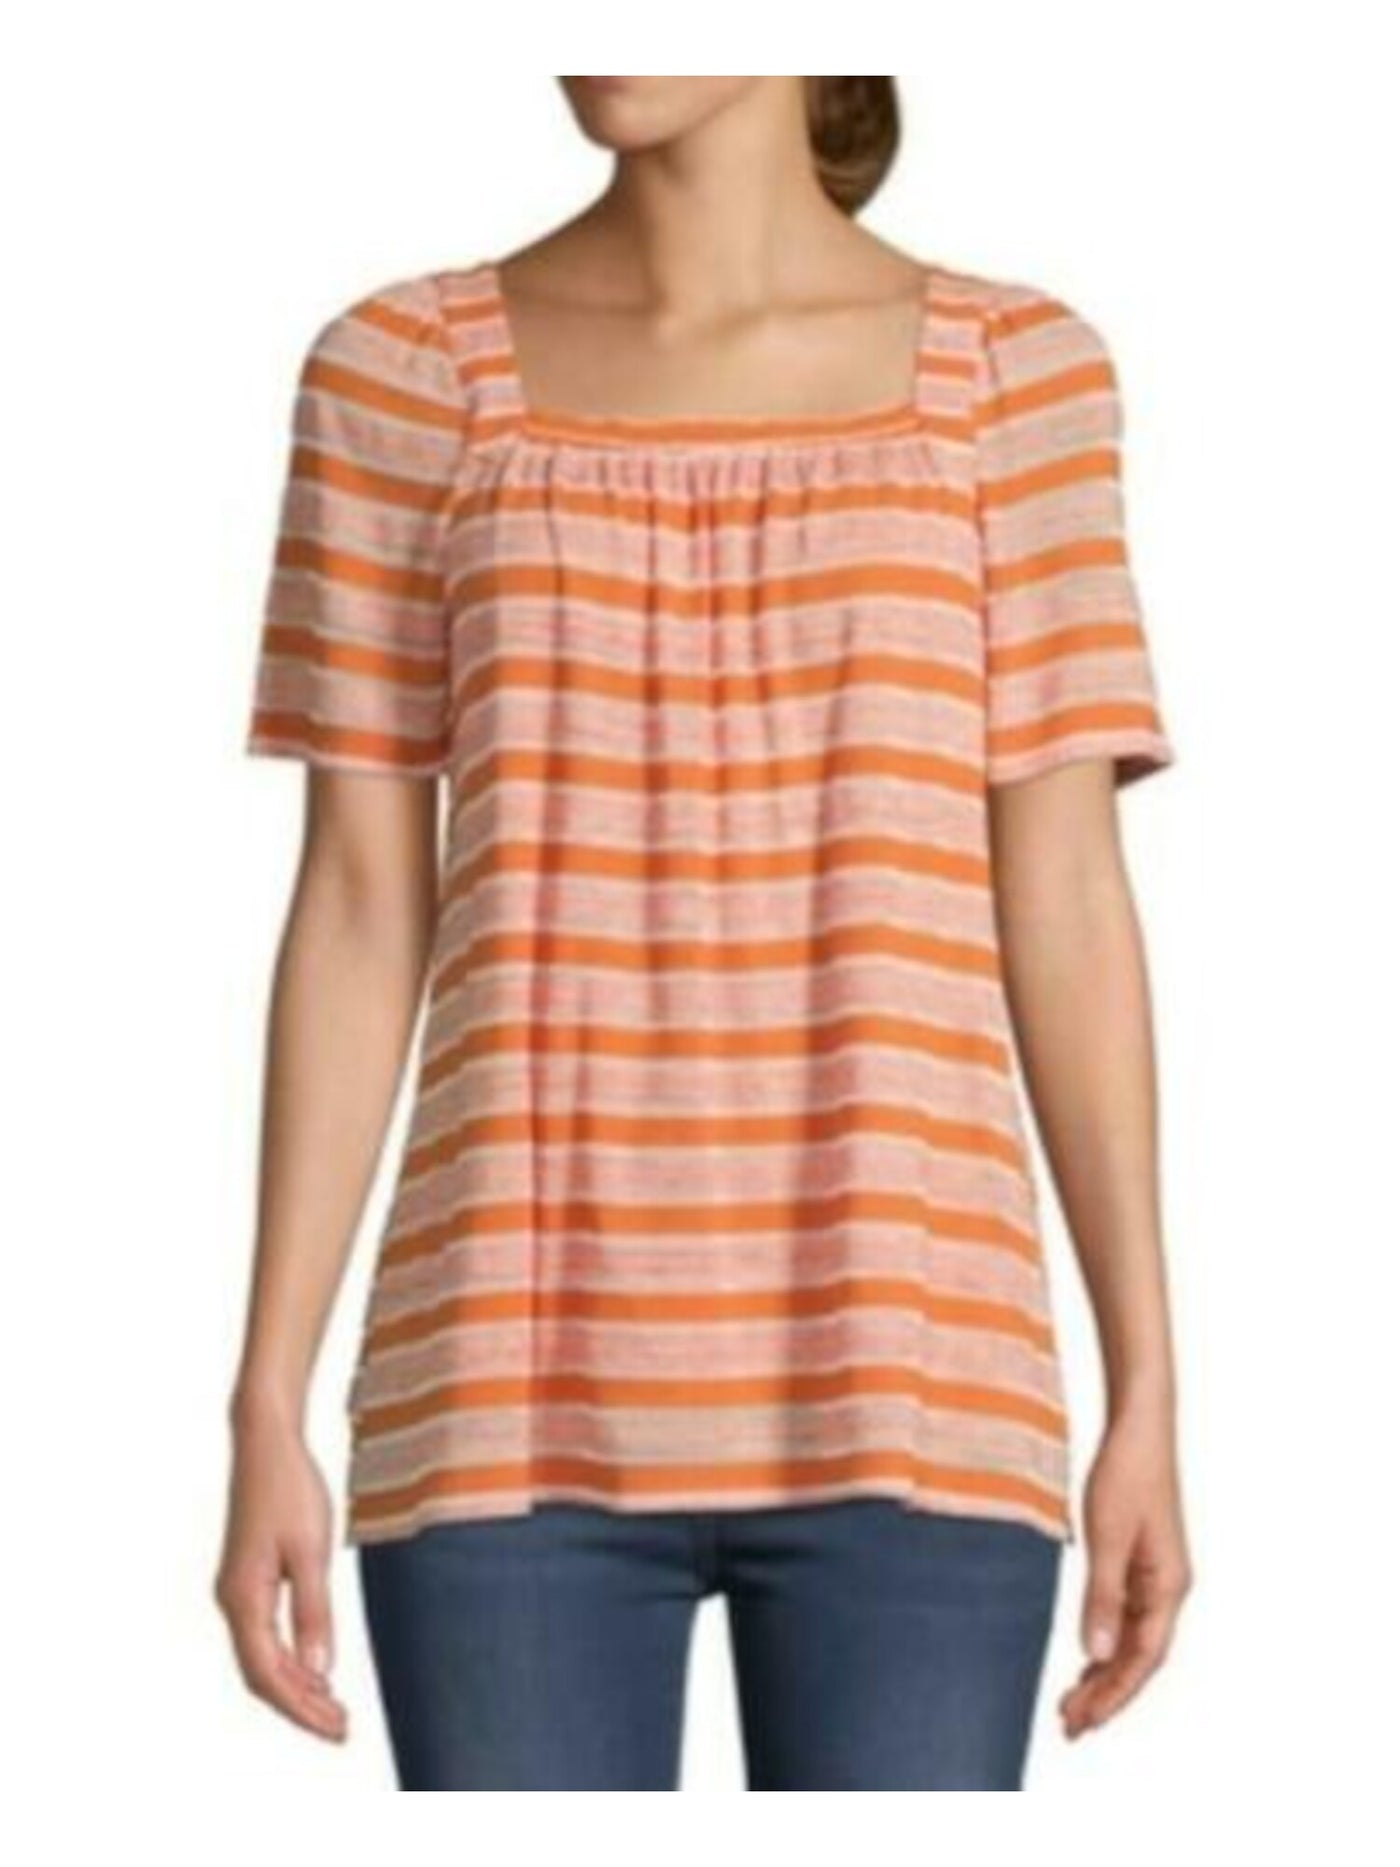 JOHN PAUL RICHARD Womens Orange Pleated Striped Short Sleeve Square Neck Top M